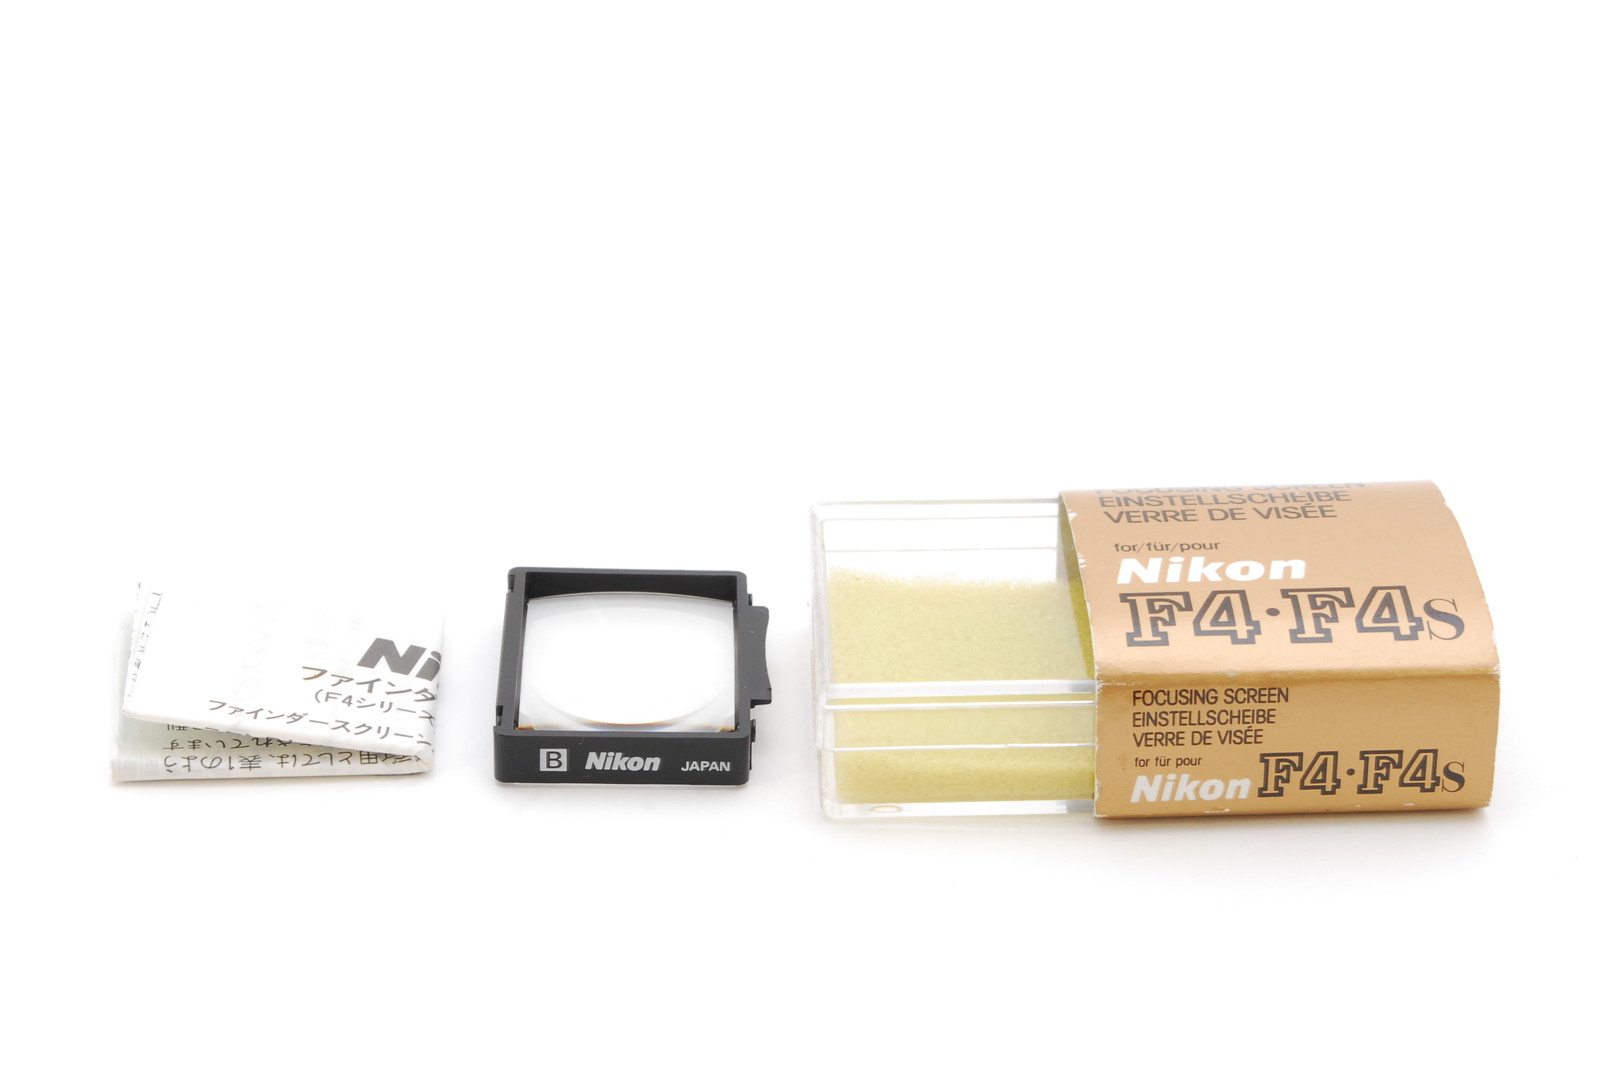 PROMOTION. MINT NIKON Focusing Screen Type B for Nikon F4 F4s, Box, Manual, Case from Japan